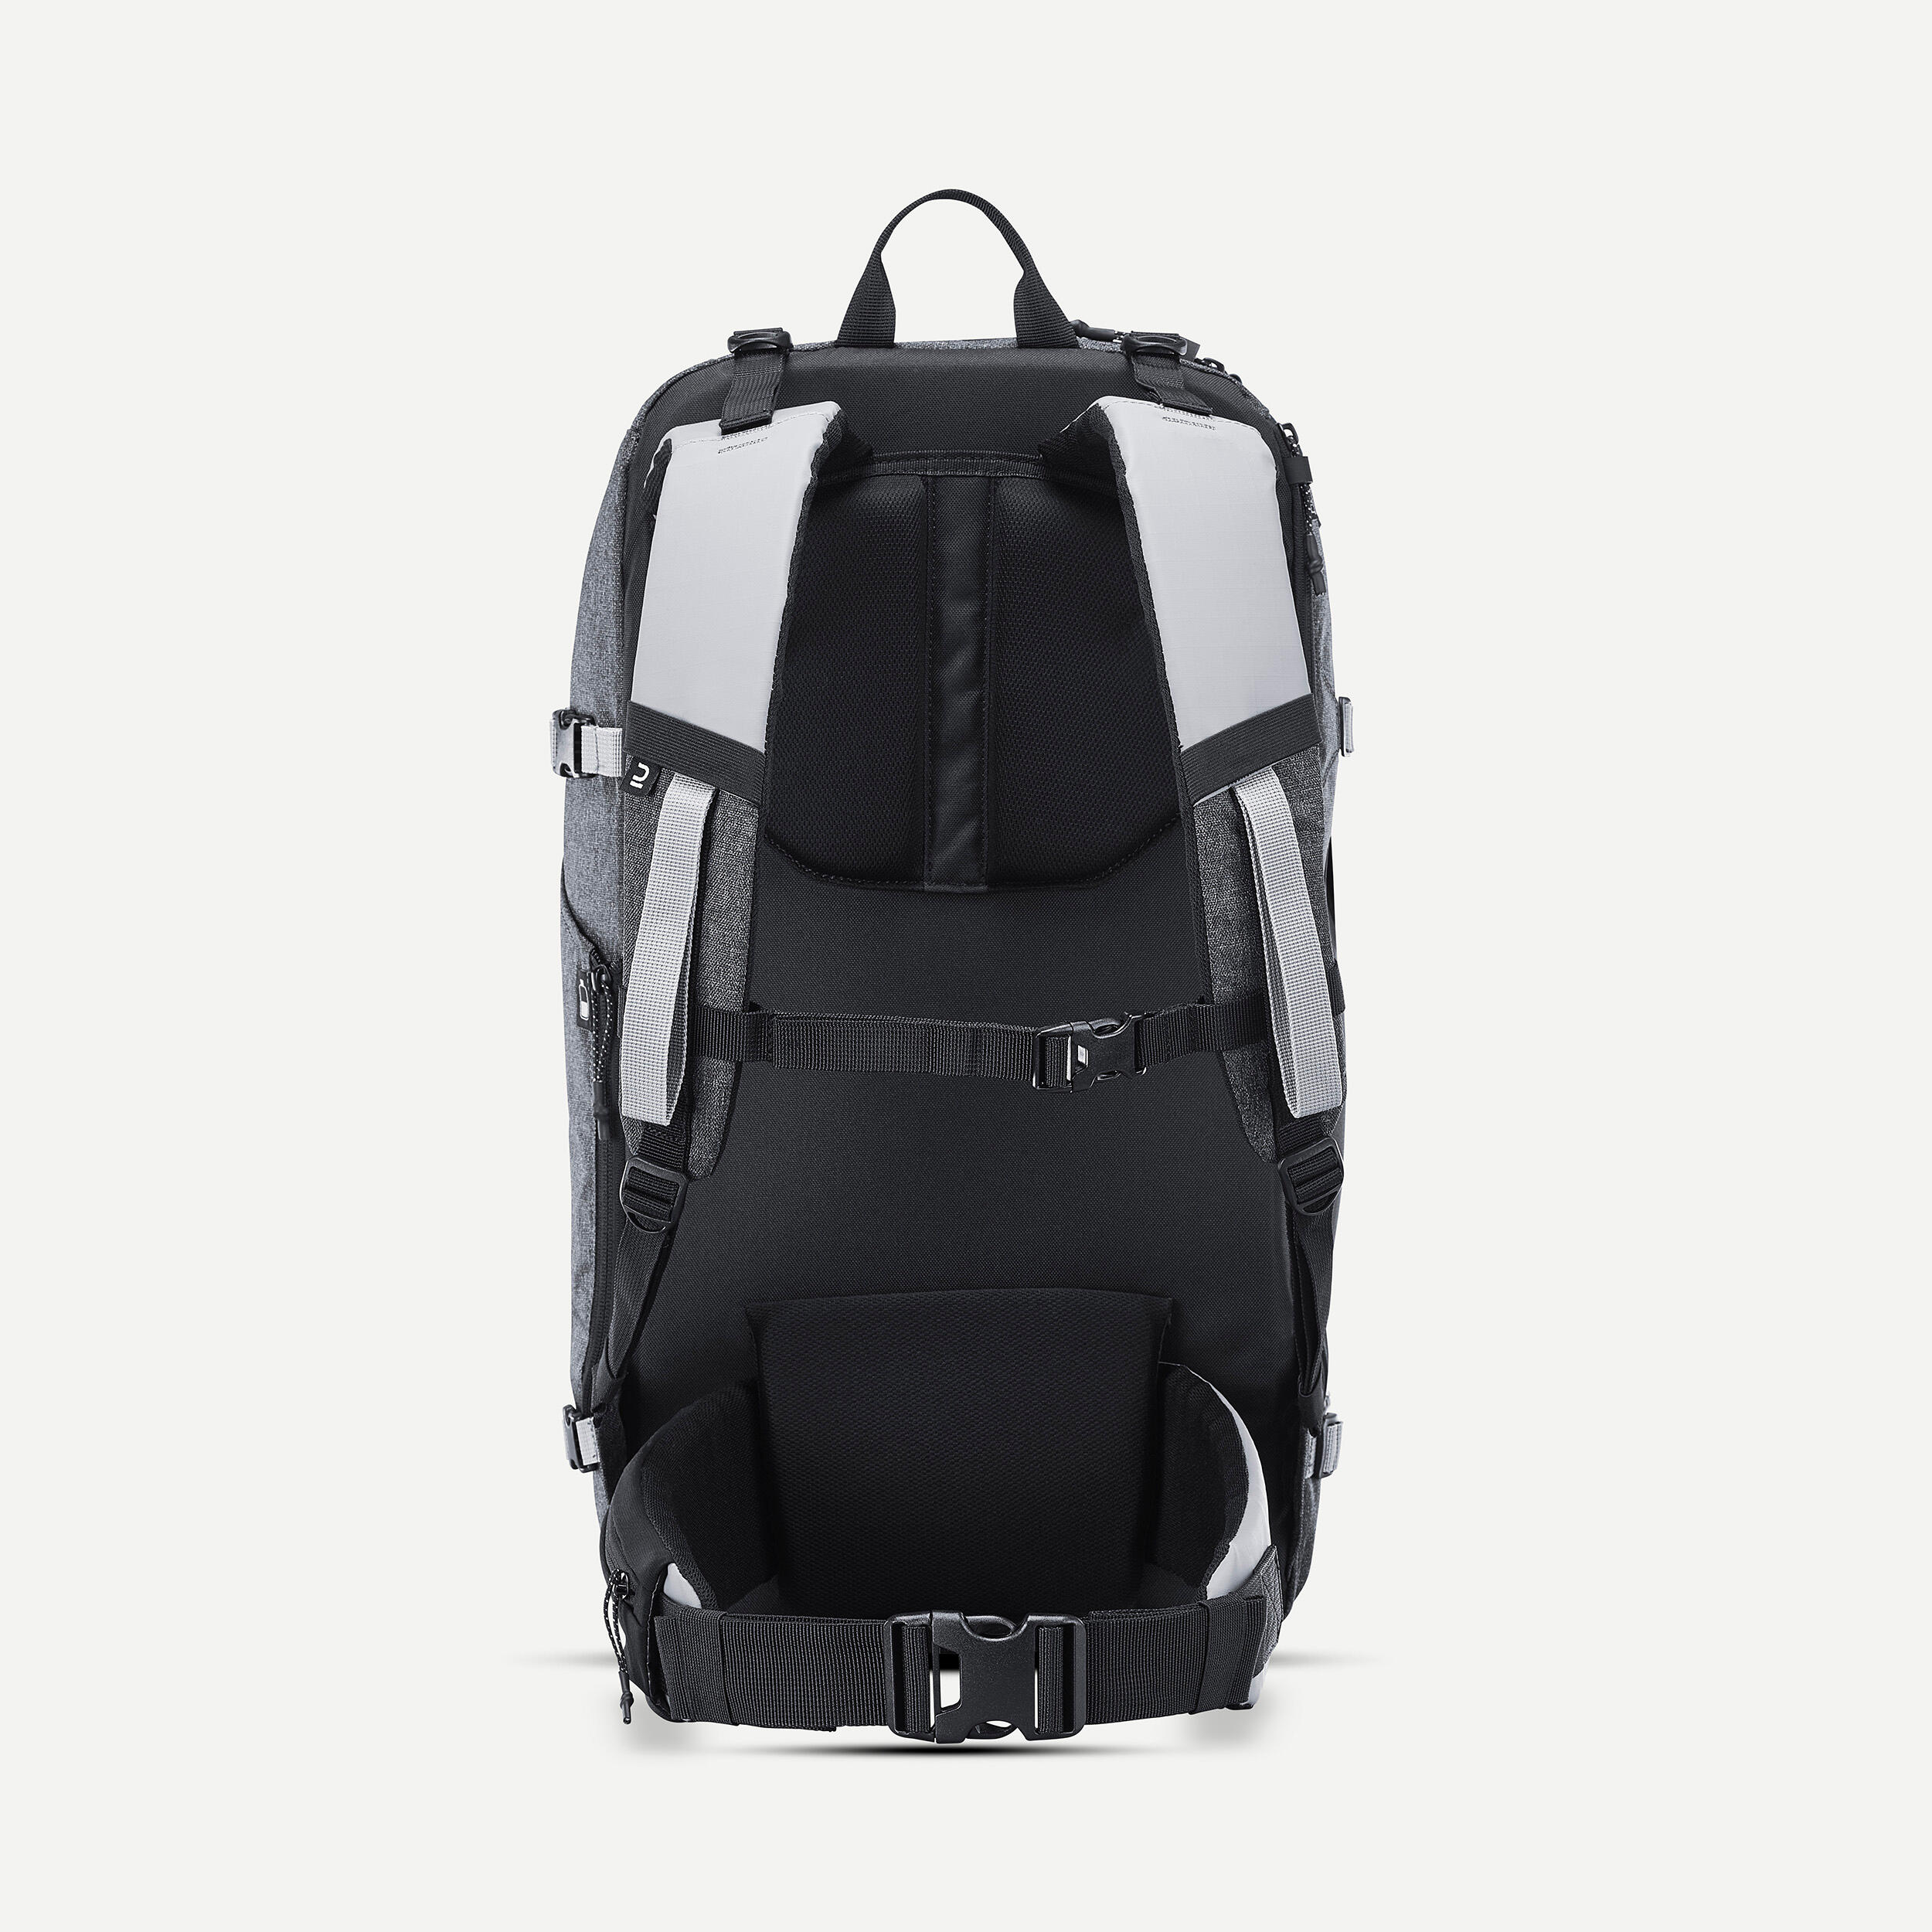 Travel Backpack 40 L - Travel 500 ORGANIZER Grey 4/10